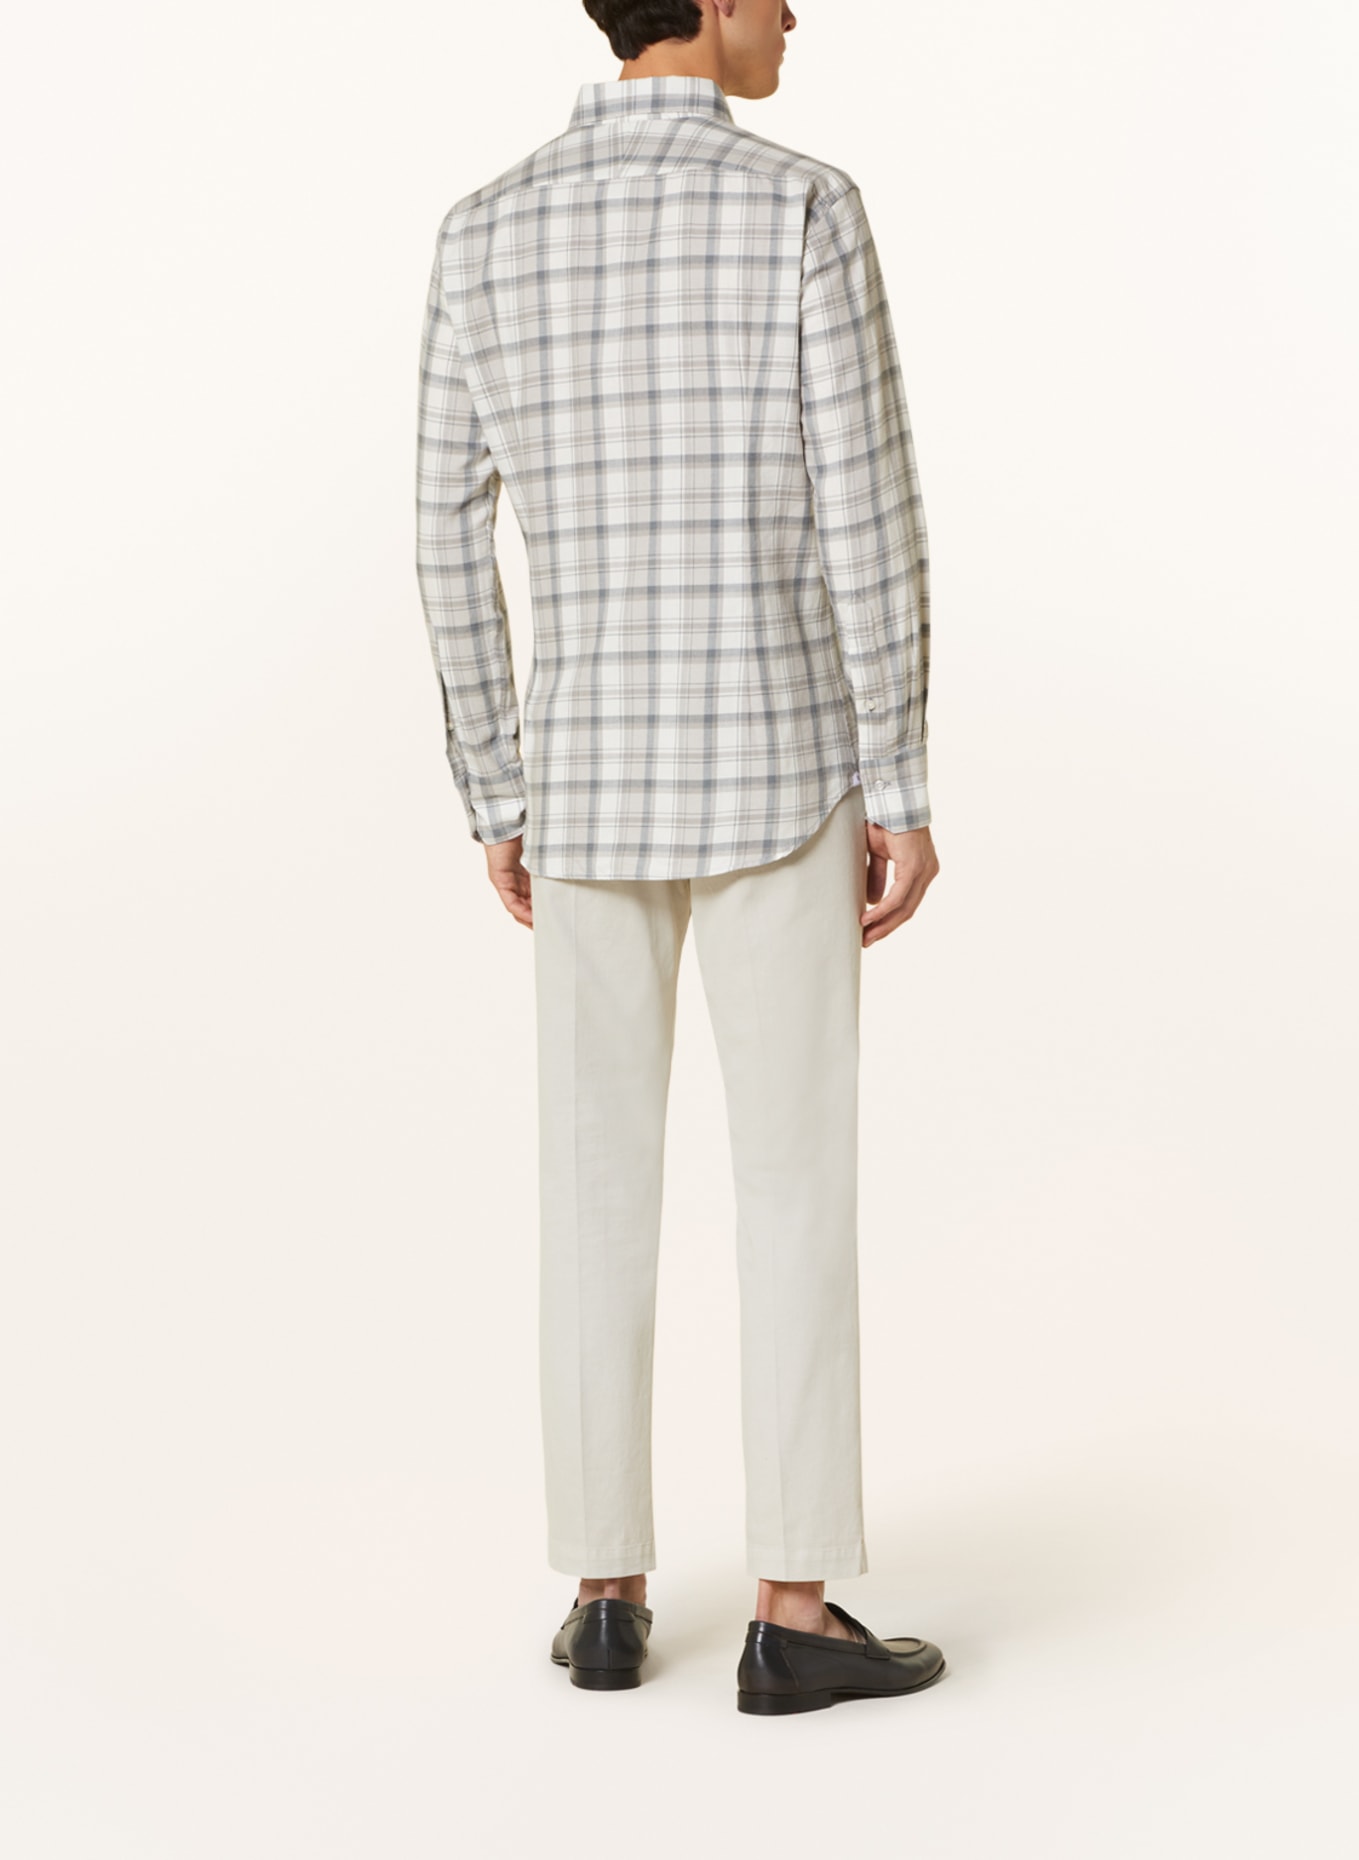 ARTIGIANO Flannel shirt classic fit, Color: WHITE/ LIGHT GRAY/ GRAY (Image 3)